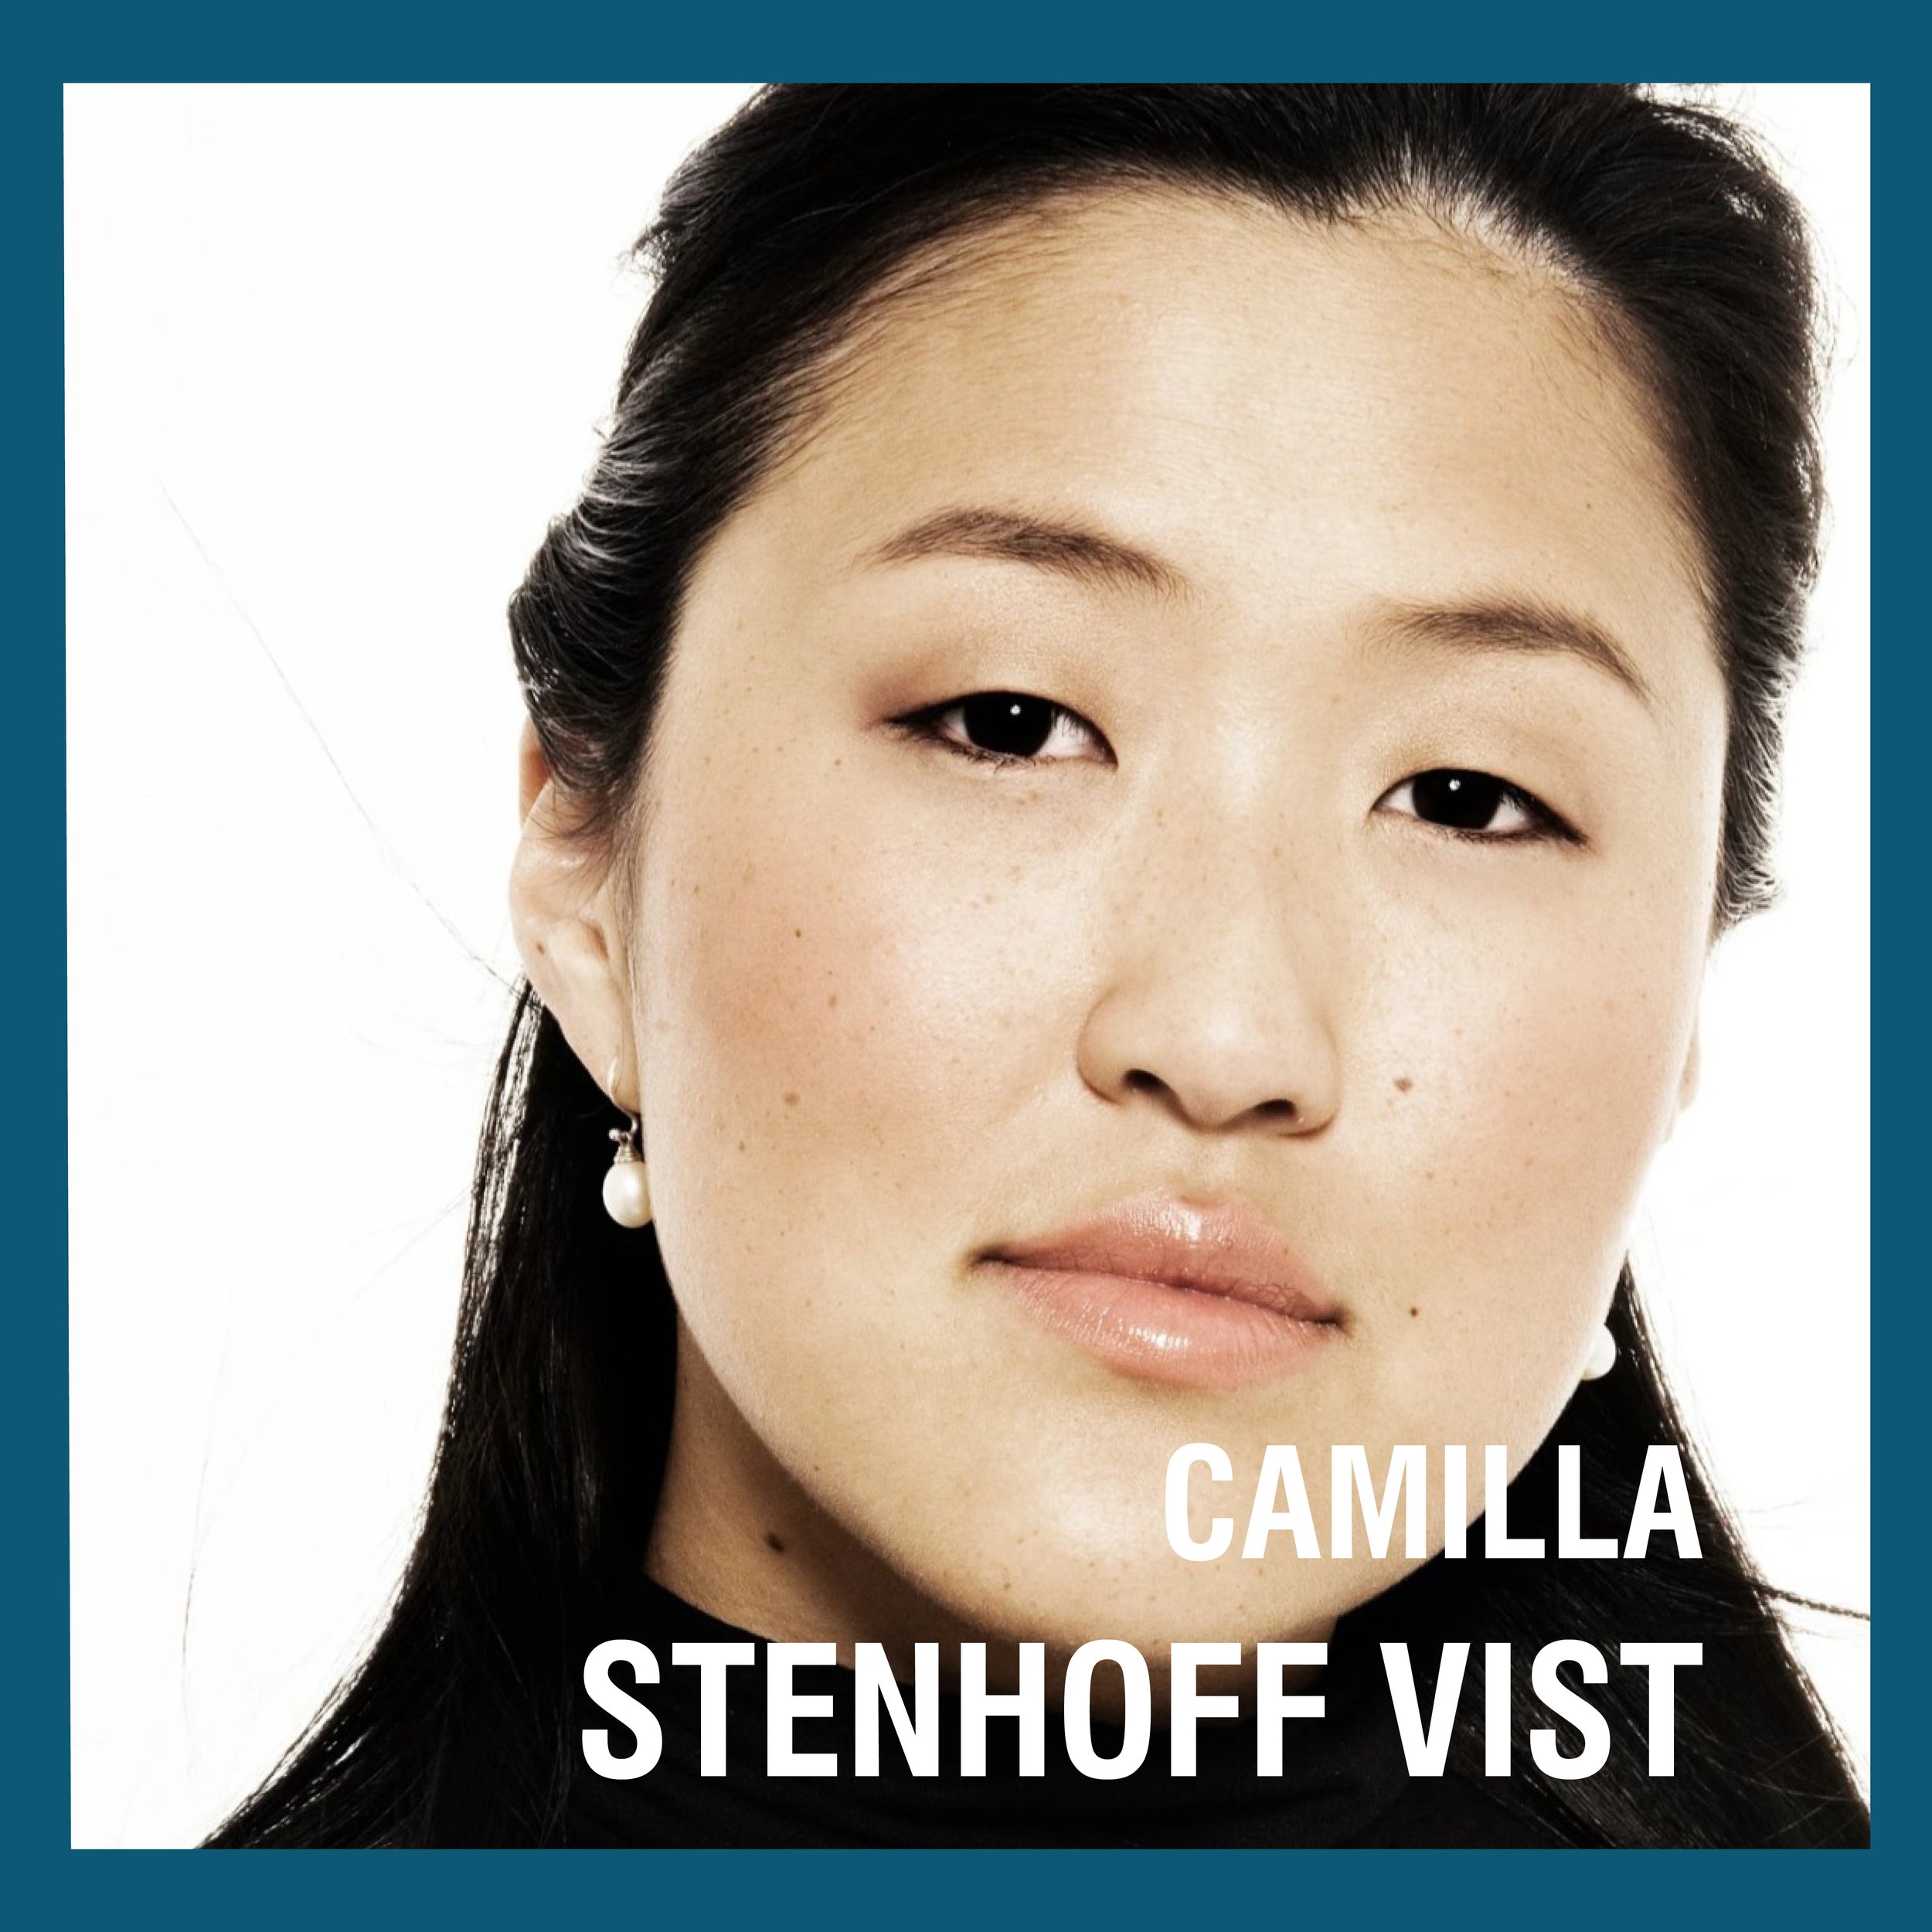 Camilla Stenhoff Vist uten logo SoMe kampanje.jpg